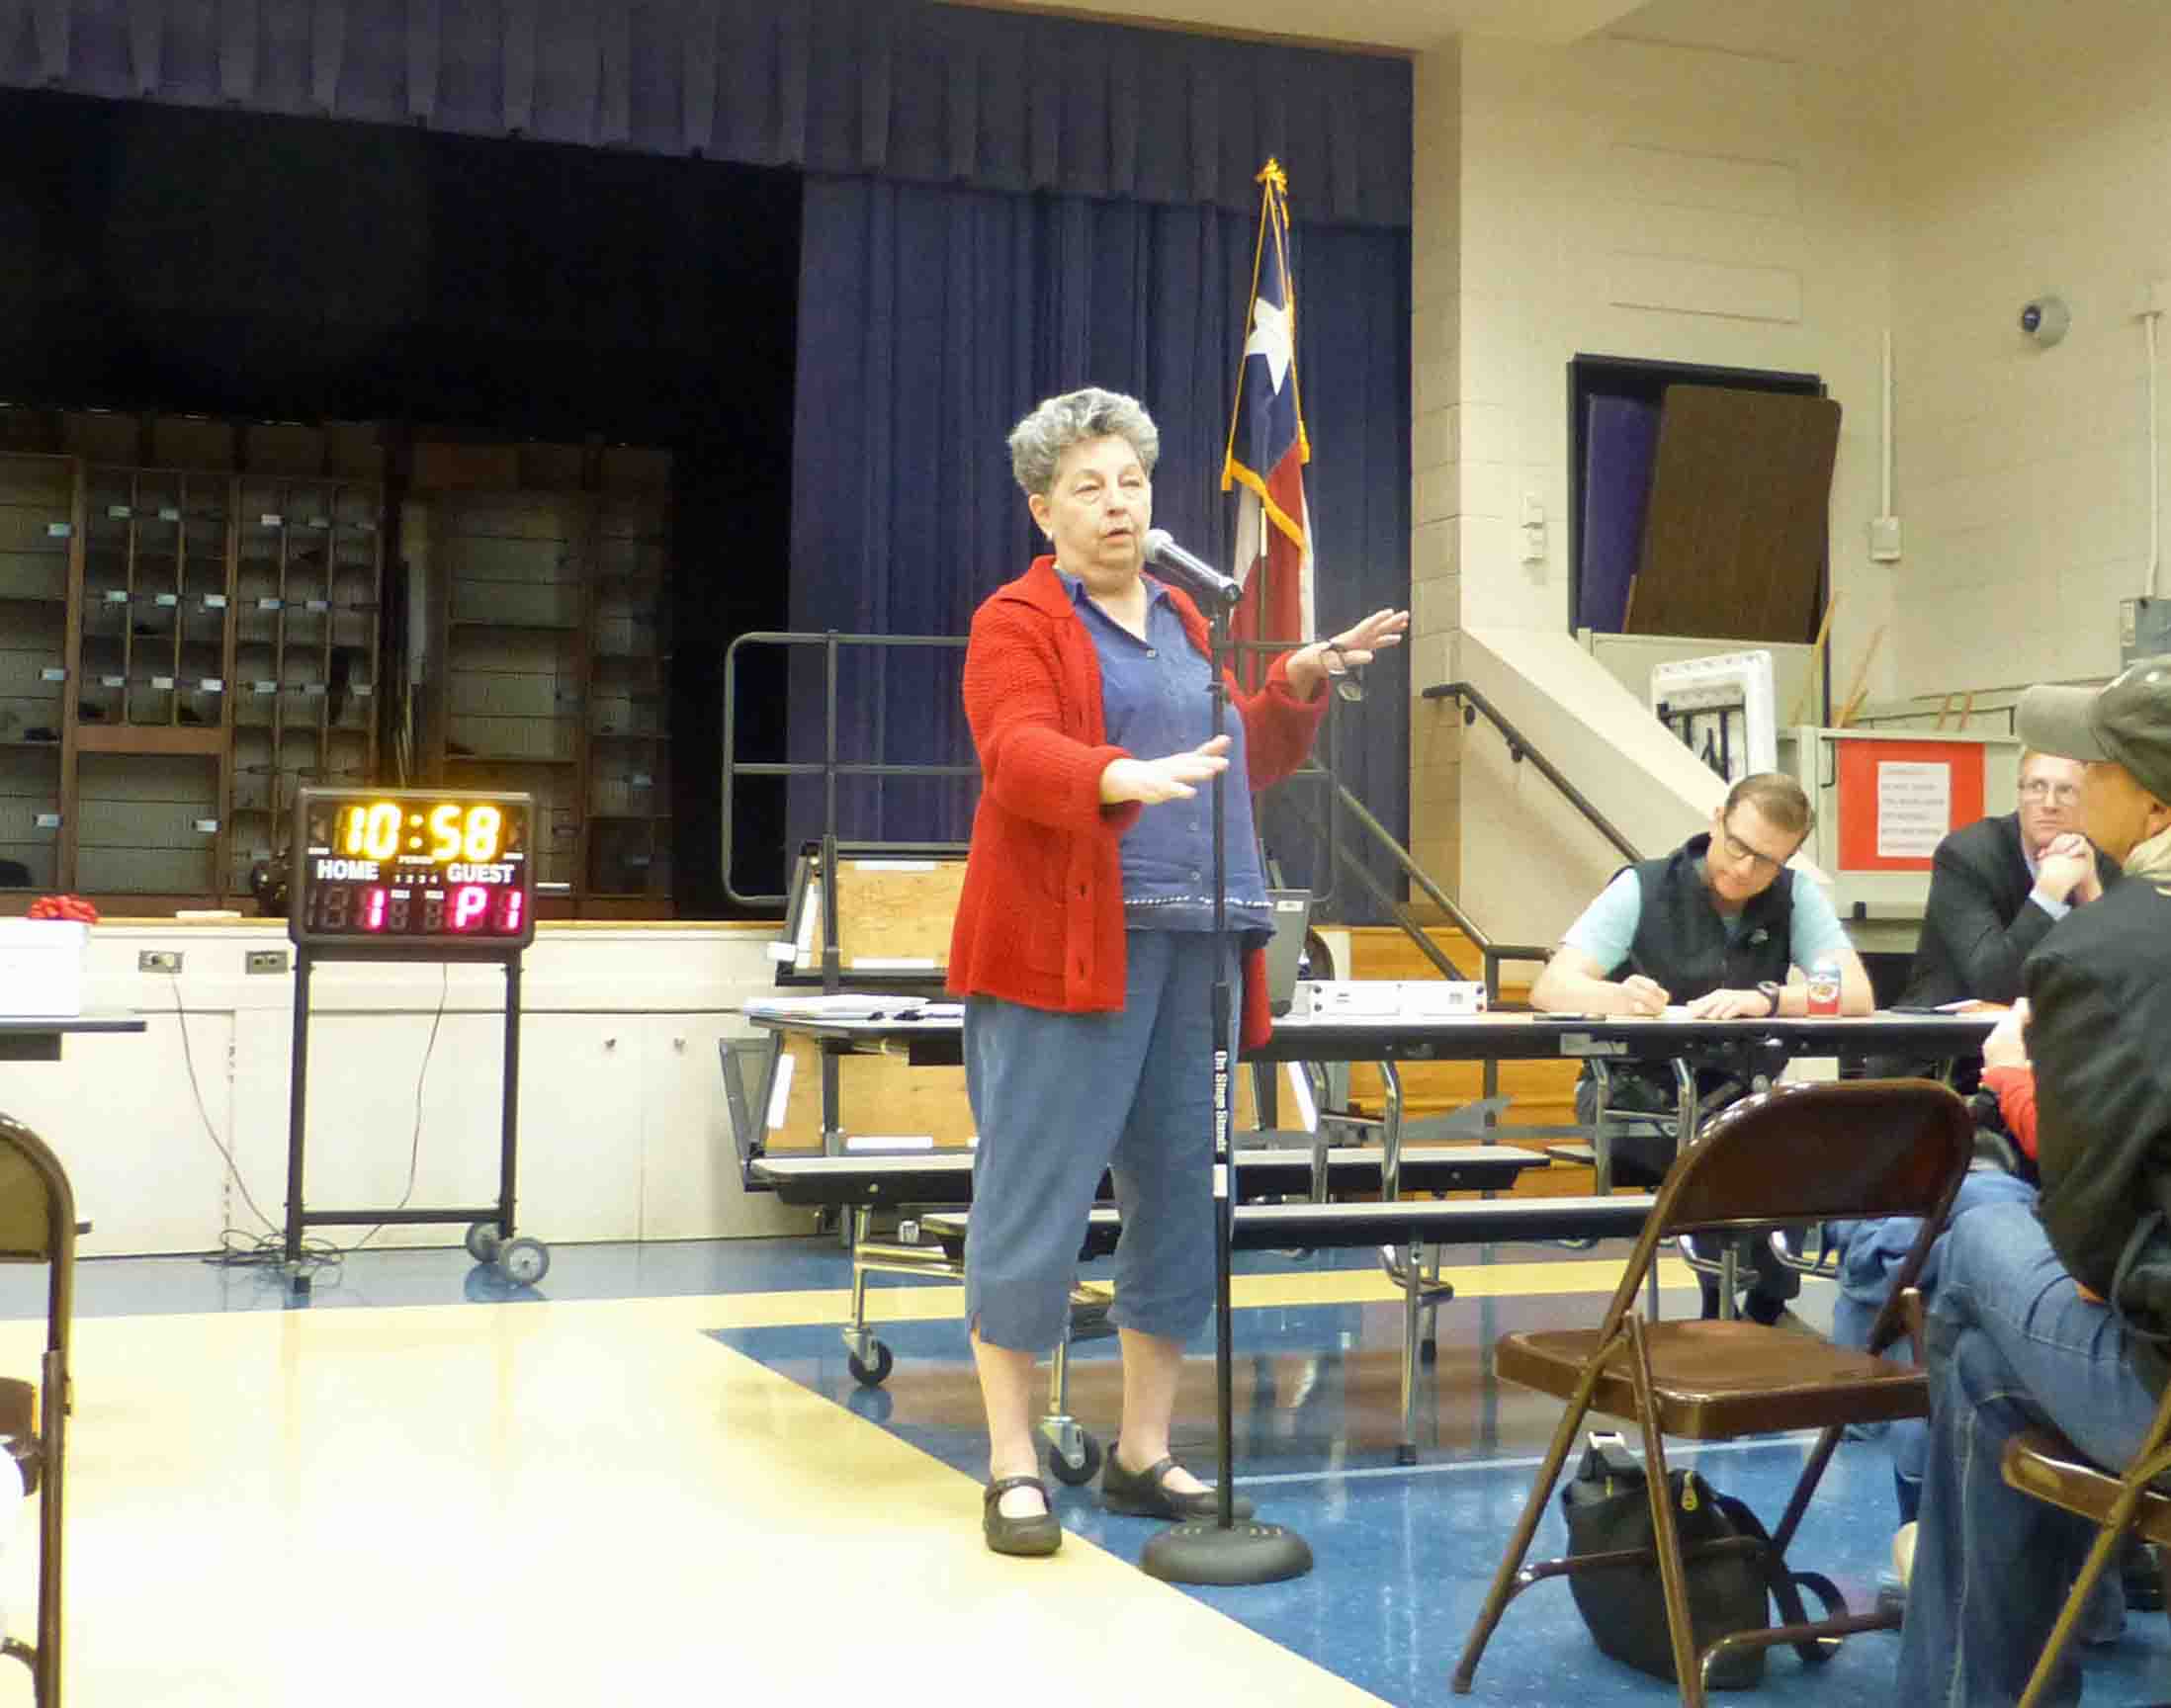 Joyce Butler speaks to the White Rock Valley Neighborhood Association